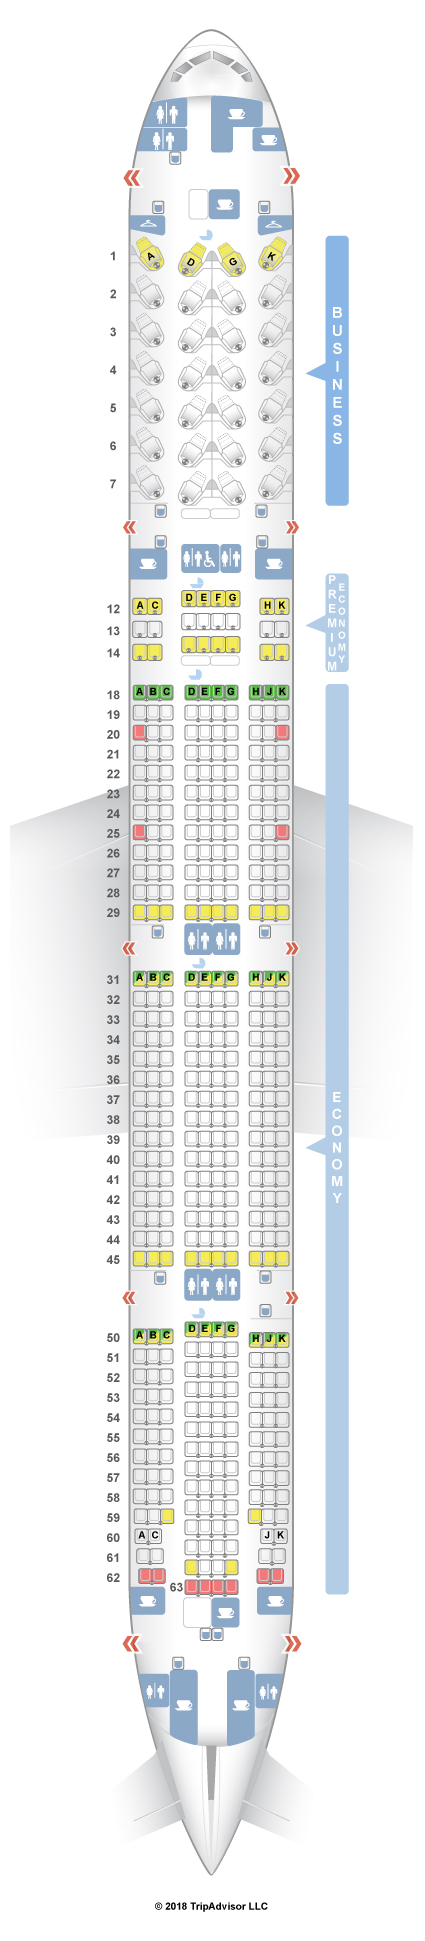 air canada 777 300er seat map